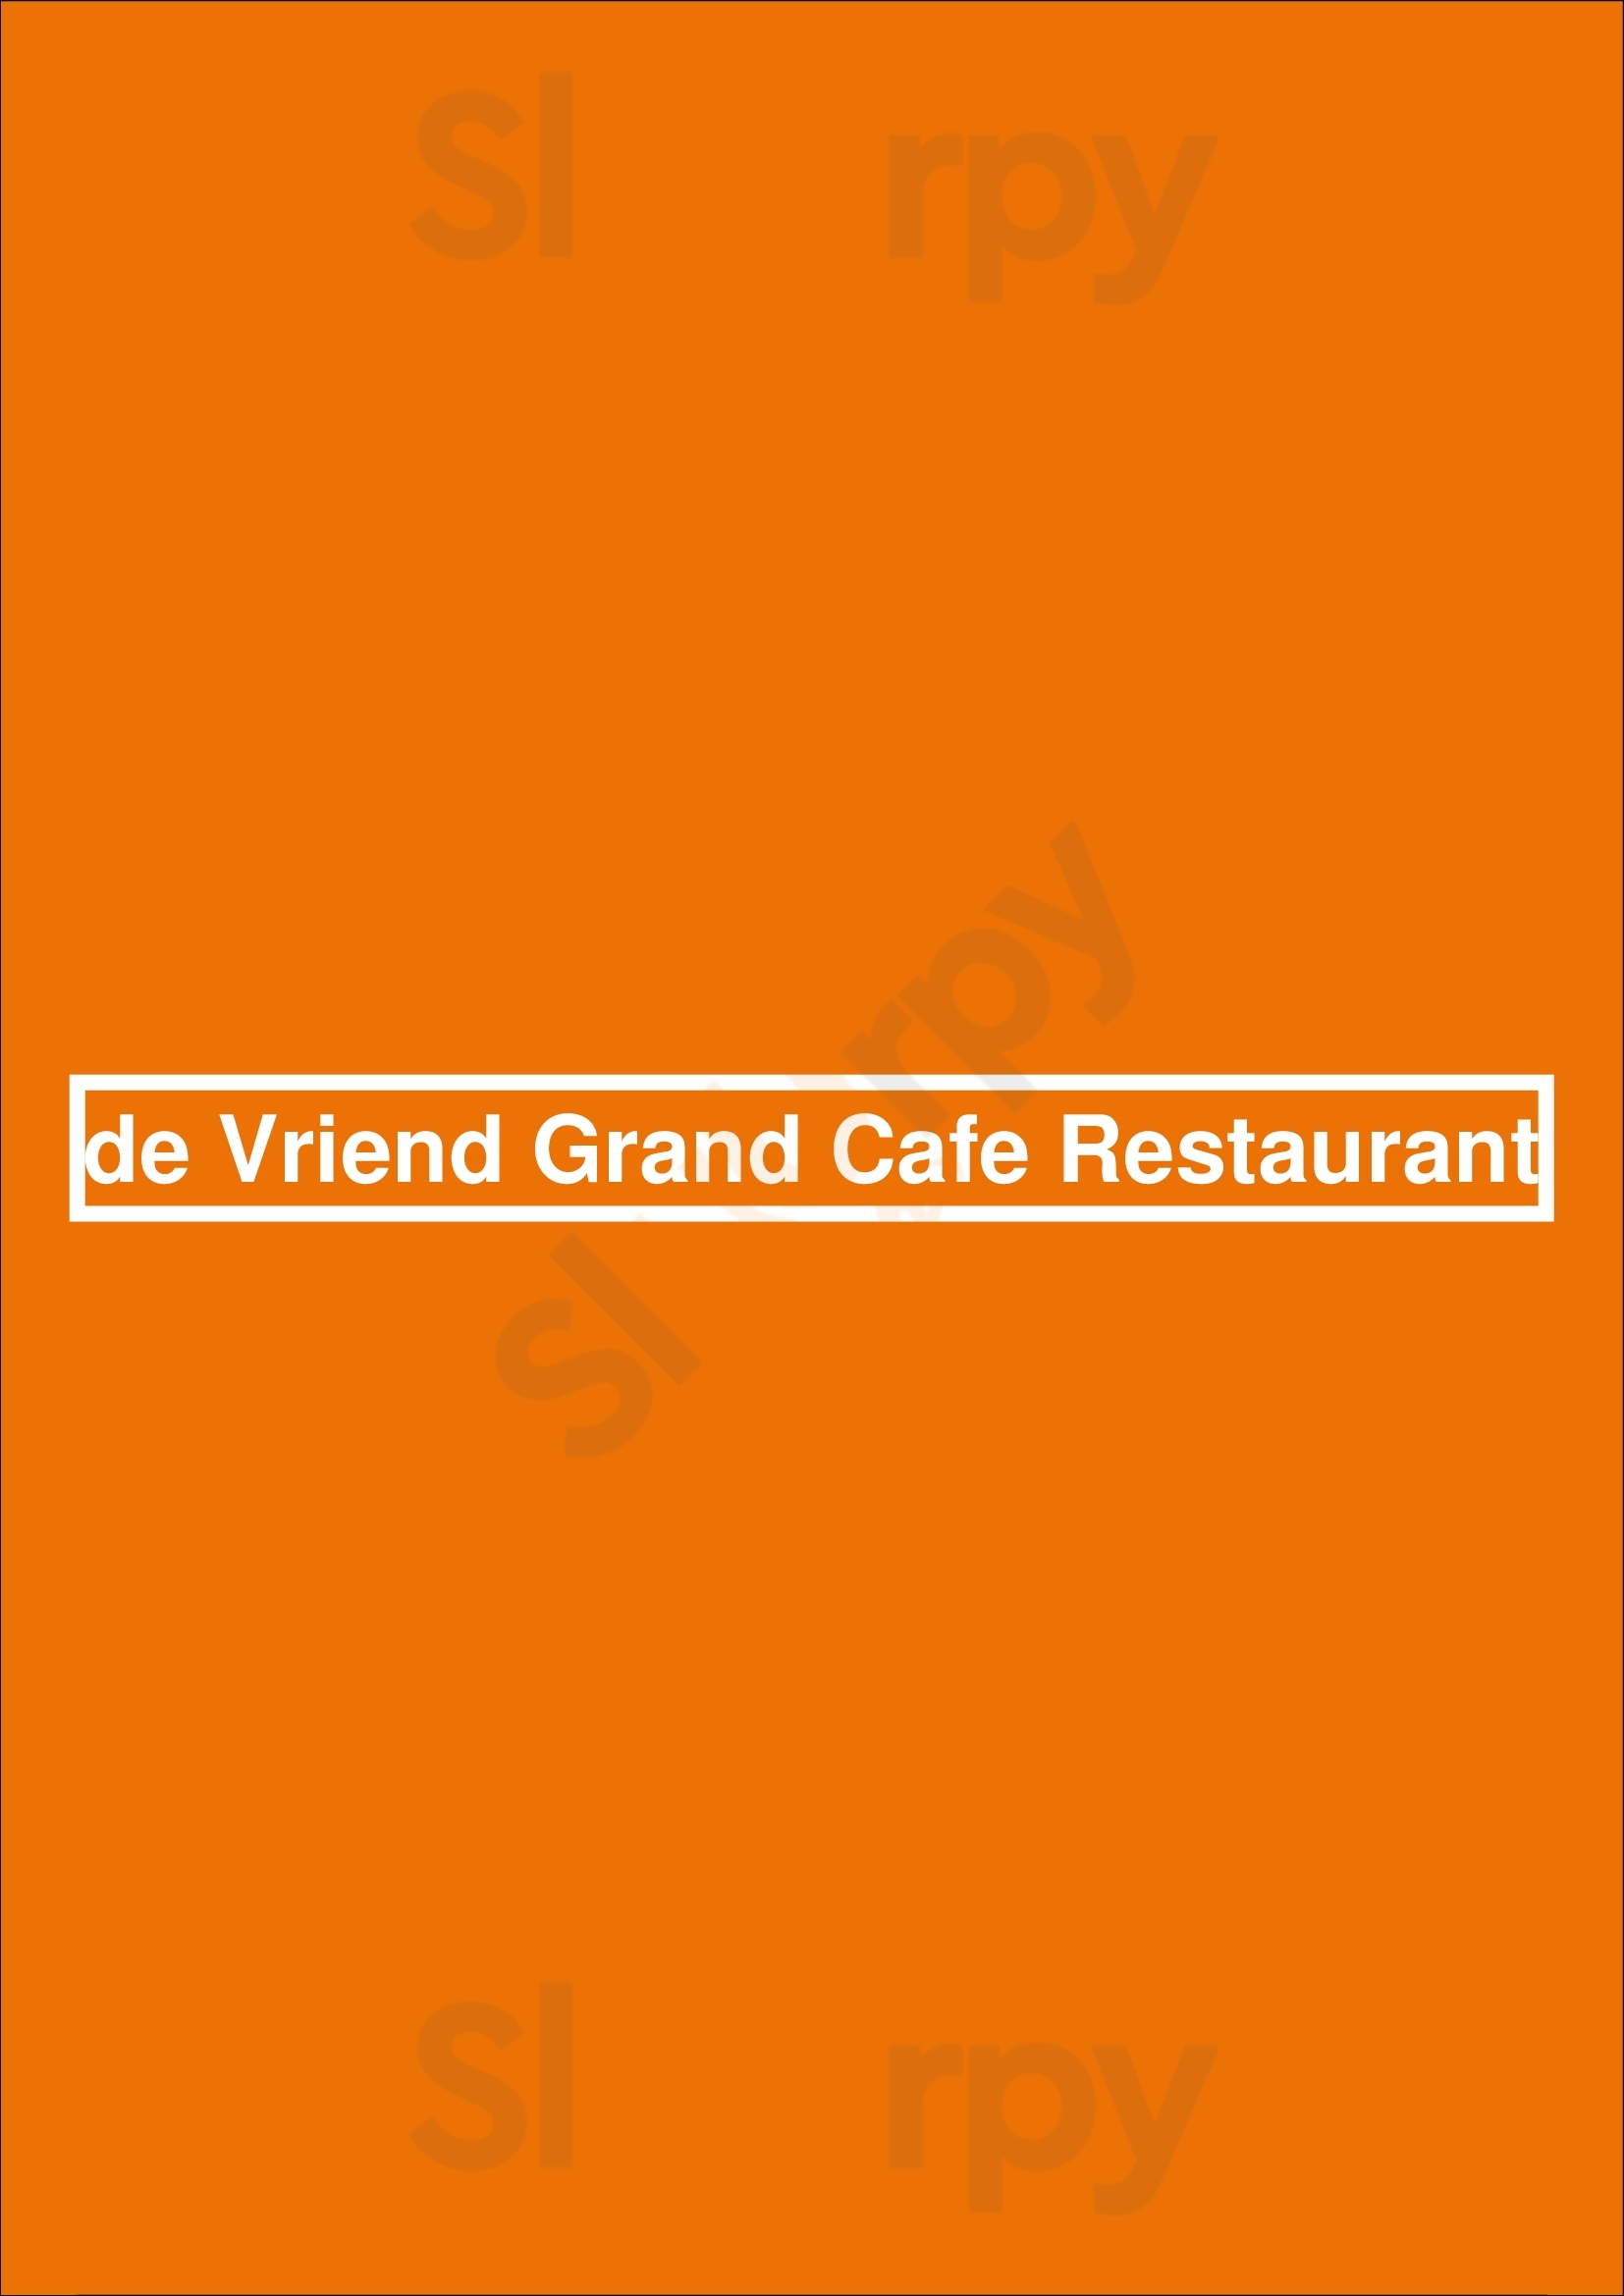 De Vriend Grand Cafe Restaurant Leiden Menu - 1